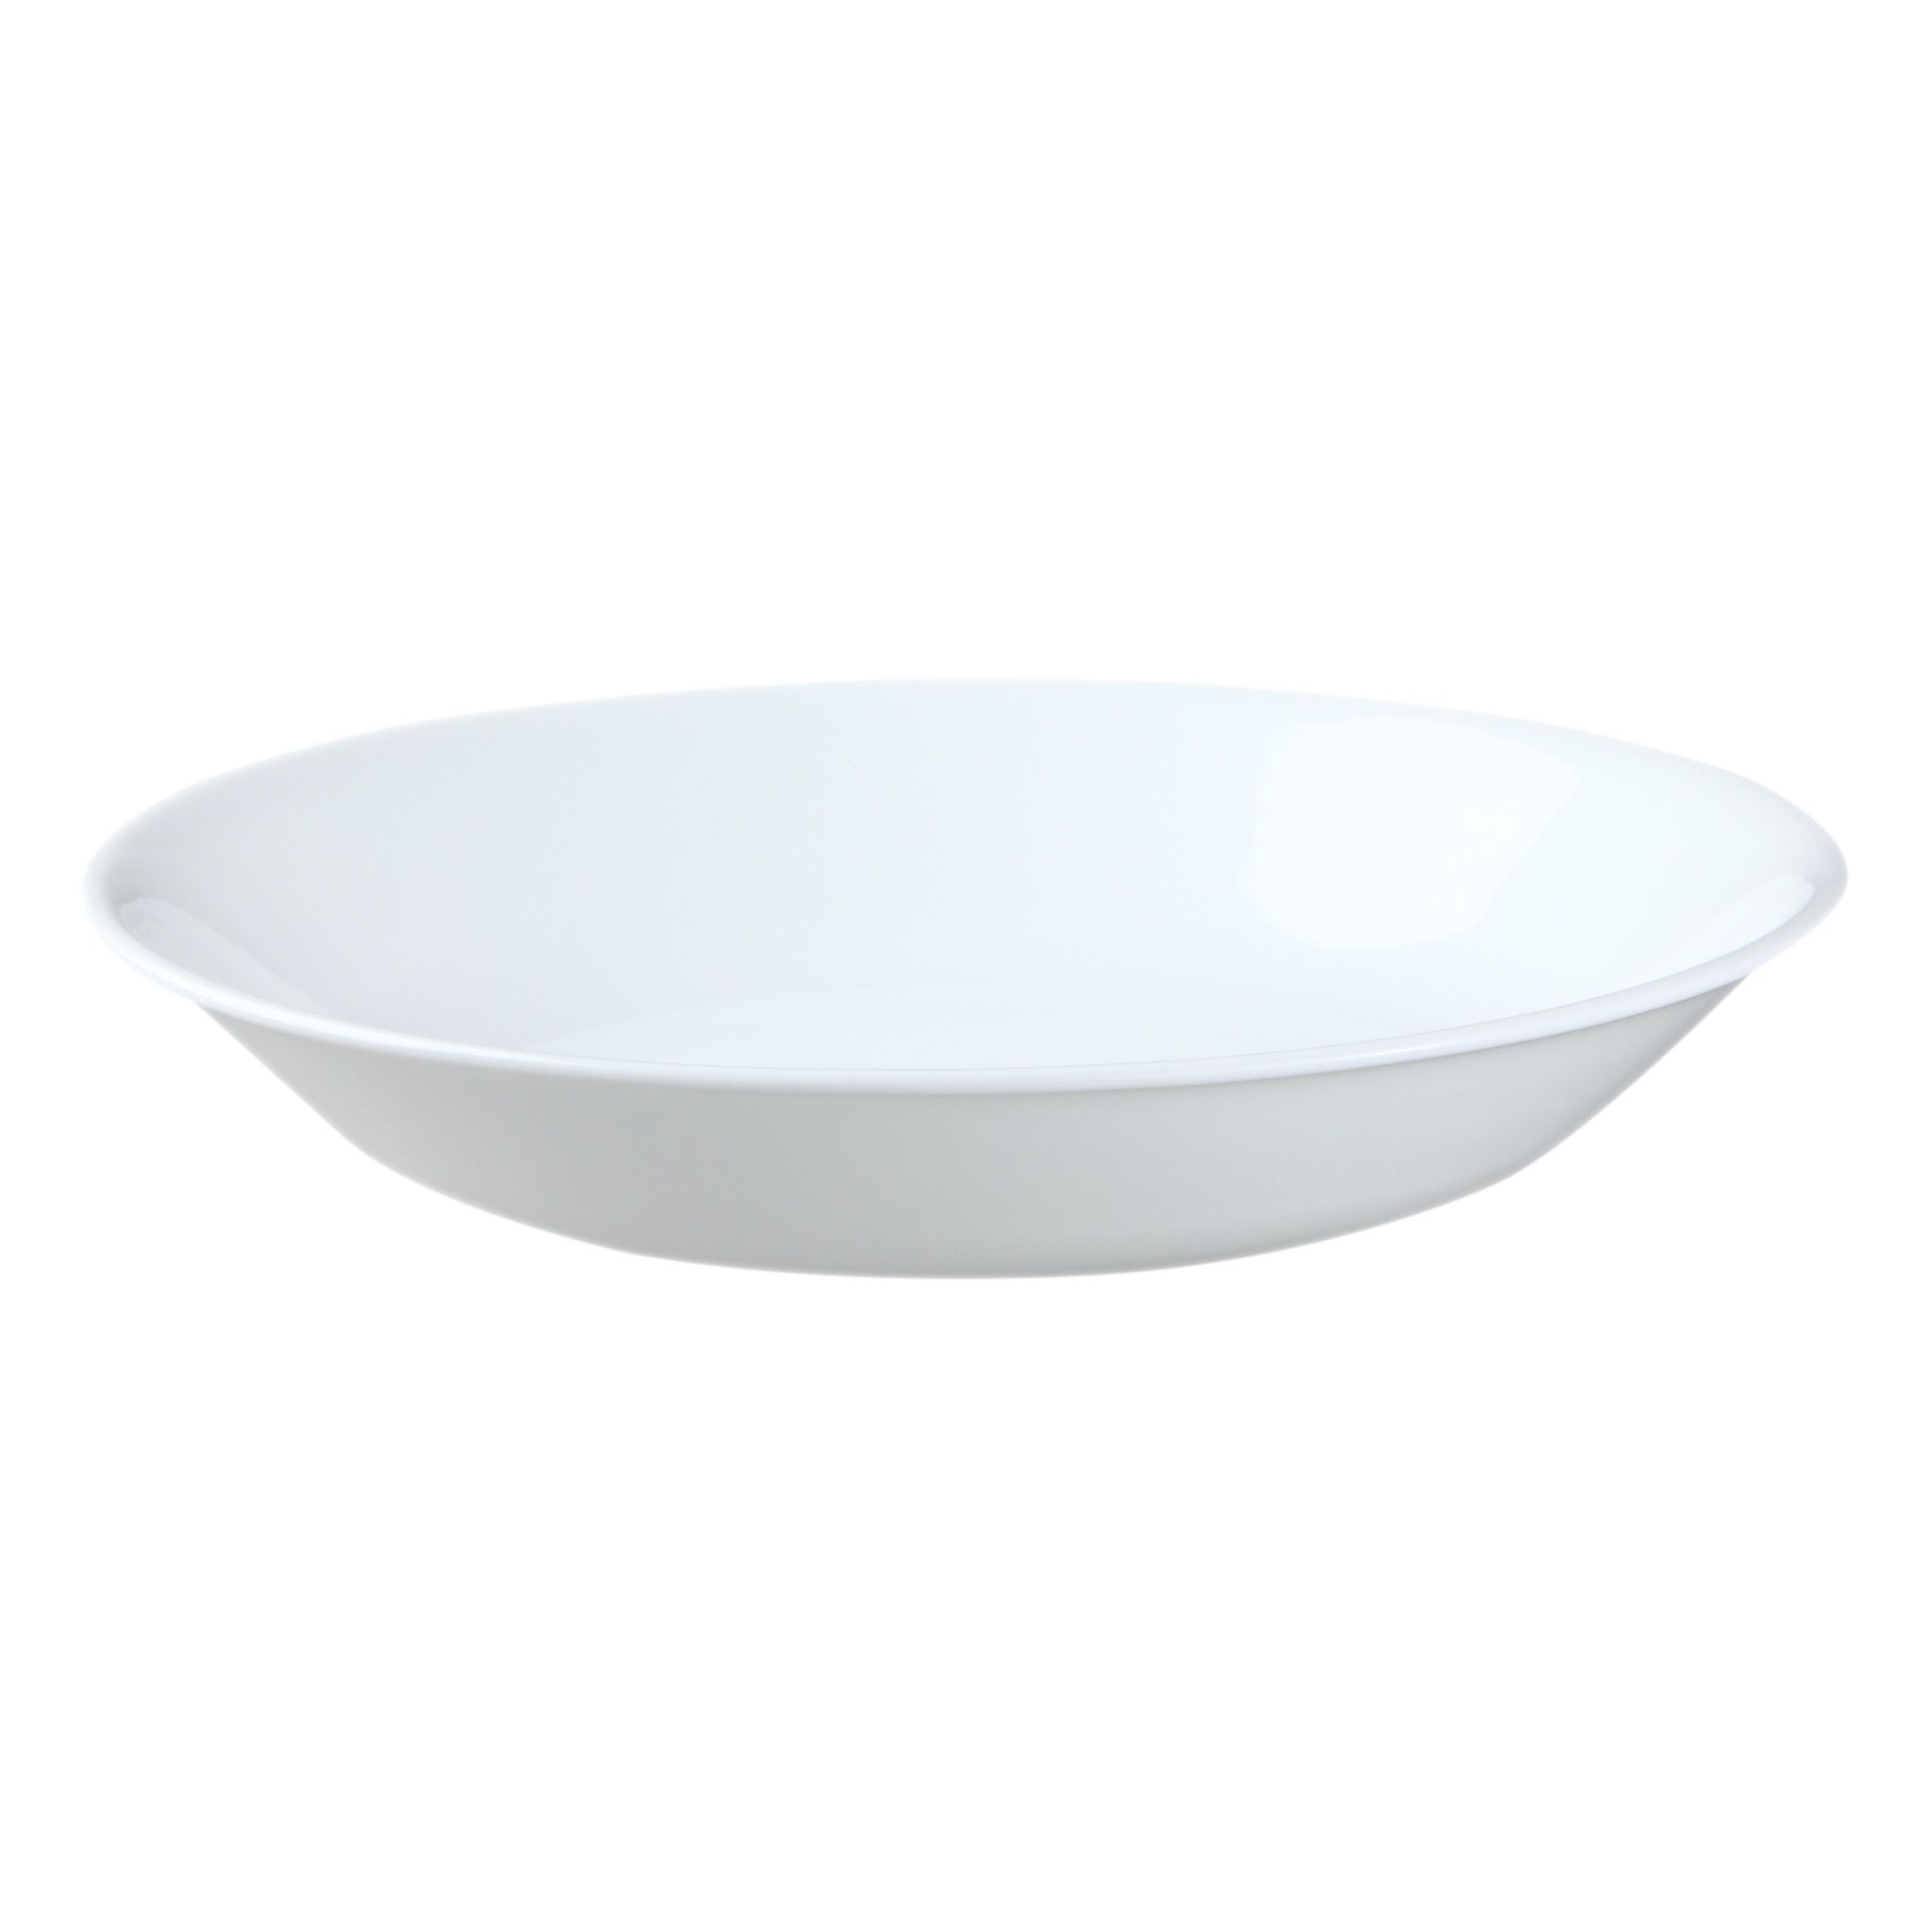 Corelle Winter Frost White, Round Pasta Bowl, 20-oz - image 1 of 6